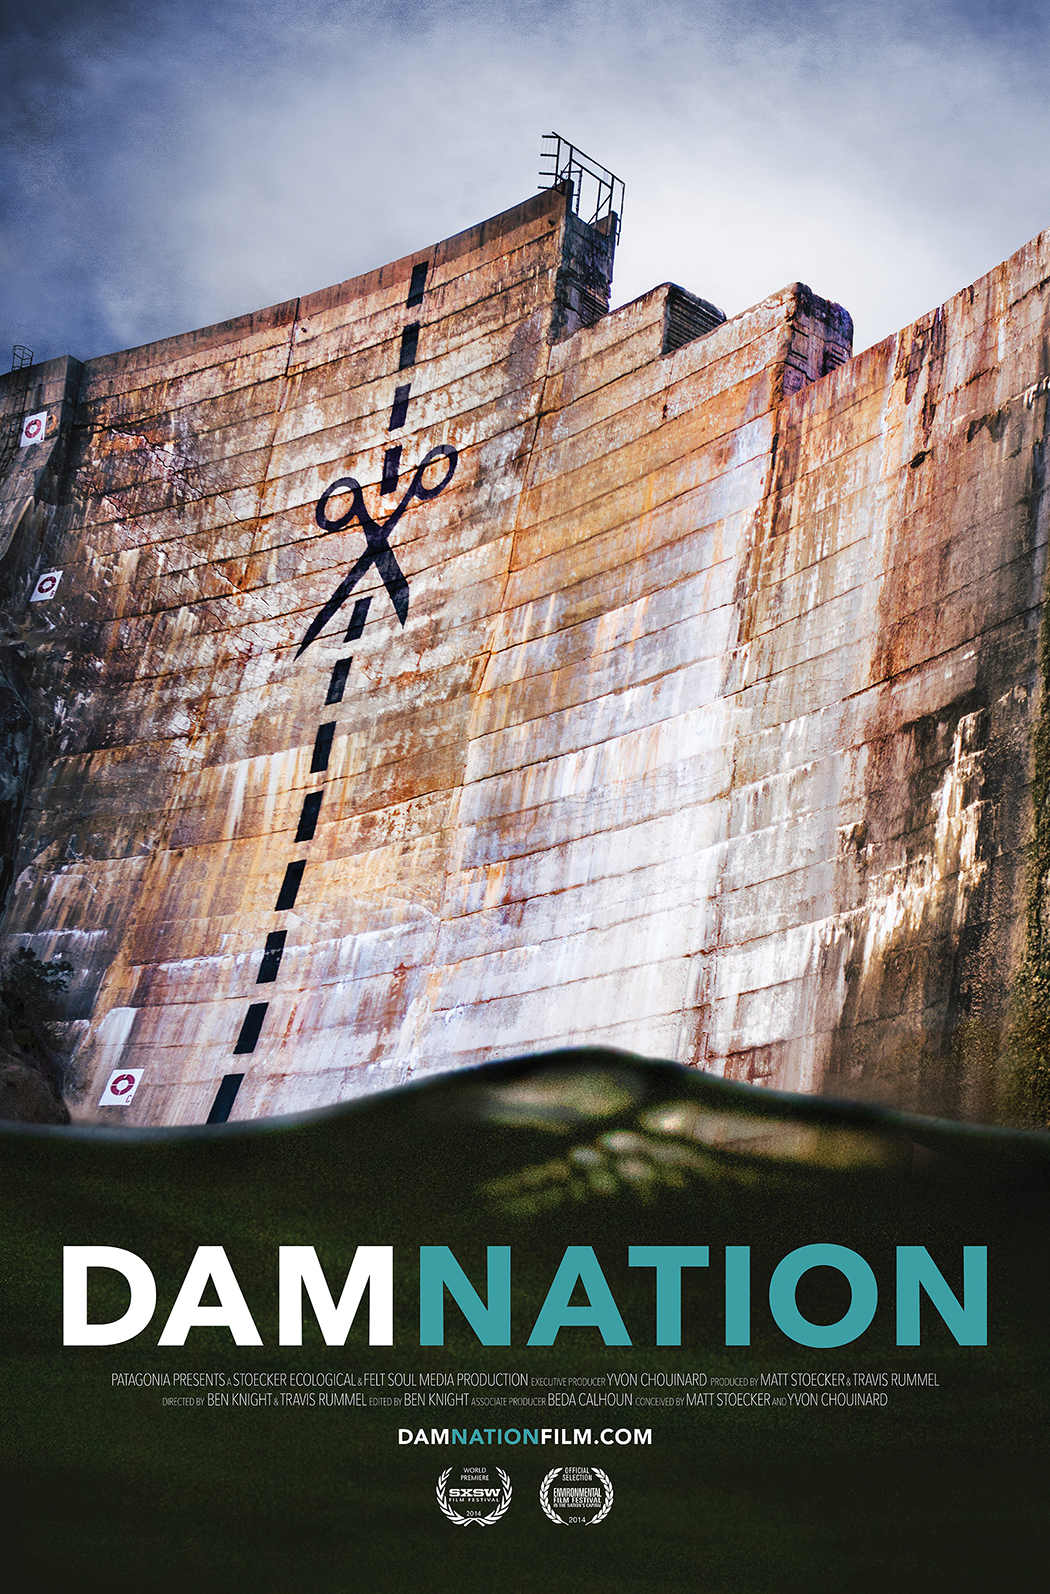 Offical movie poster for "DamNation" | Courtesy of DamNationFilm.com